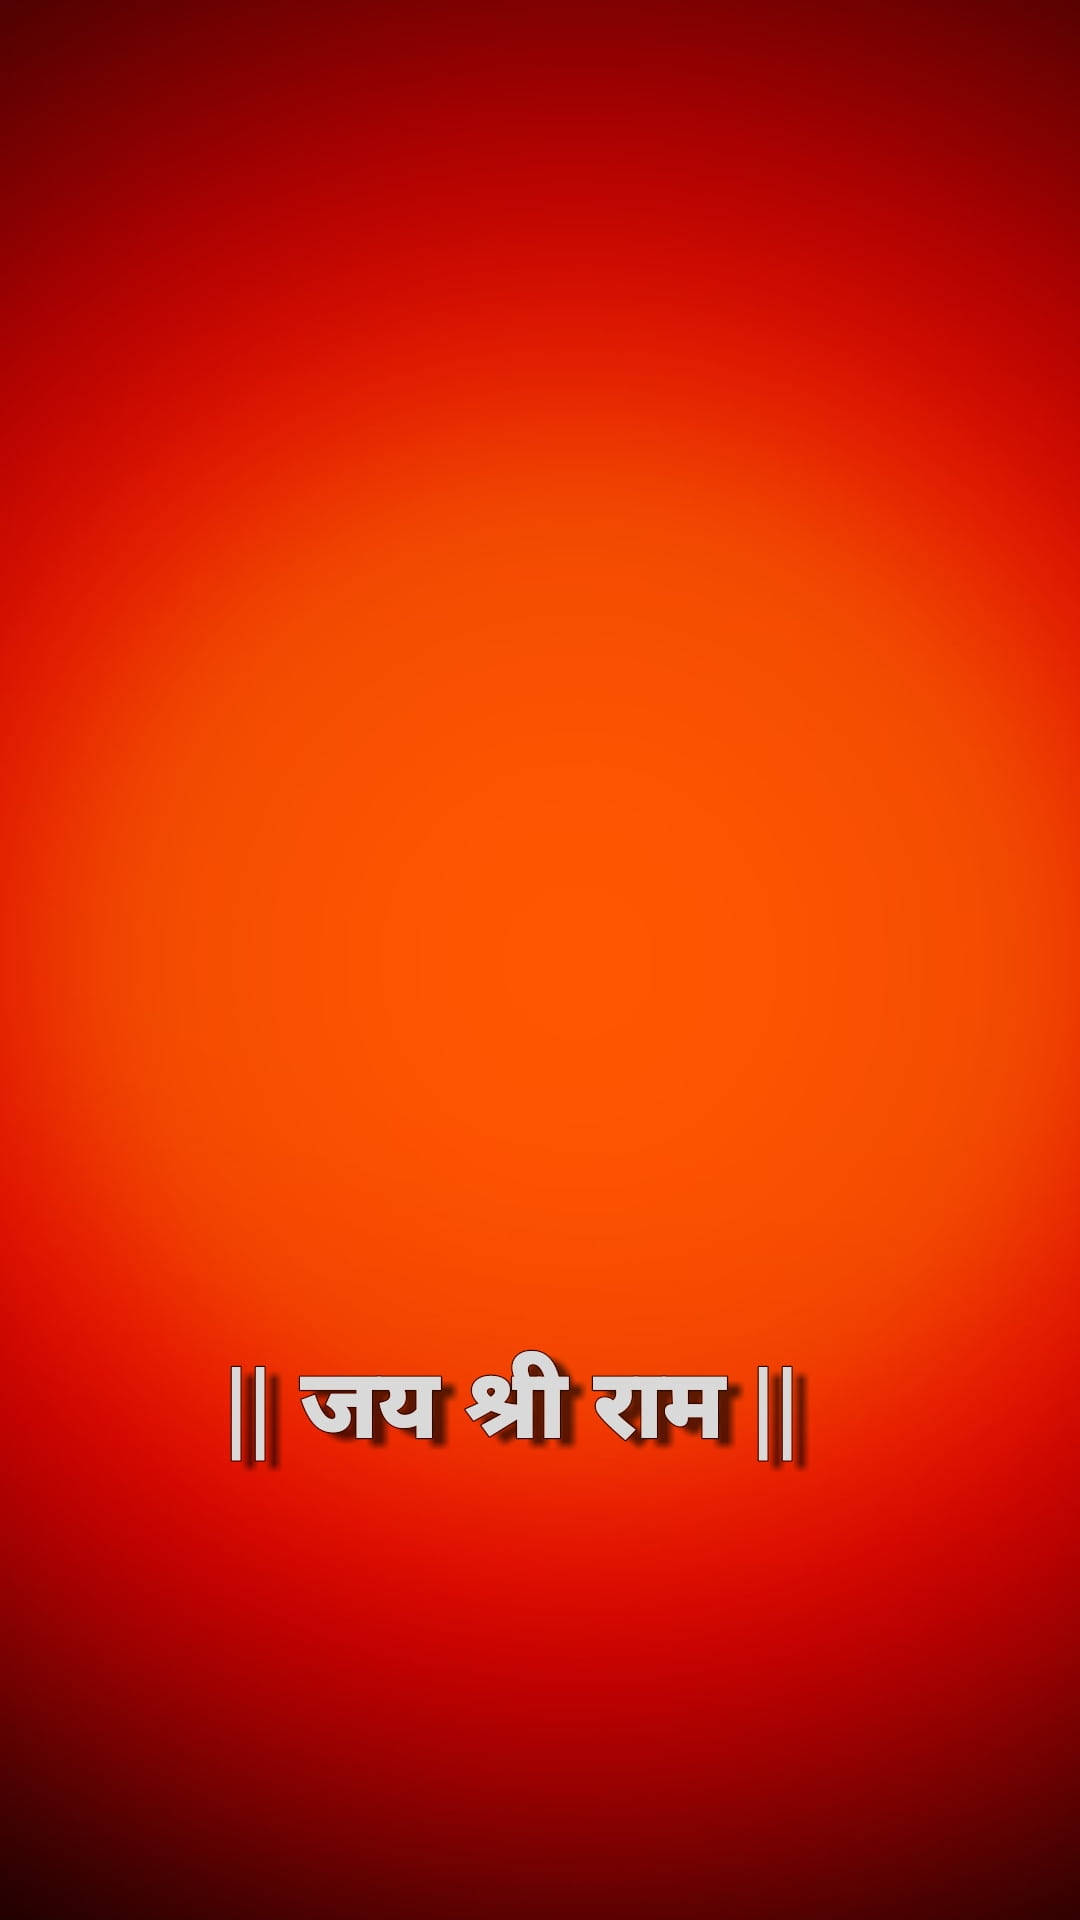 Shree Ram Orange Quote Background